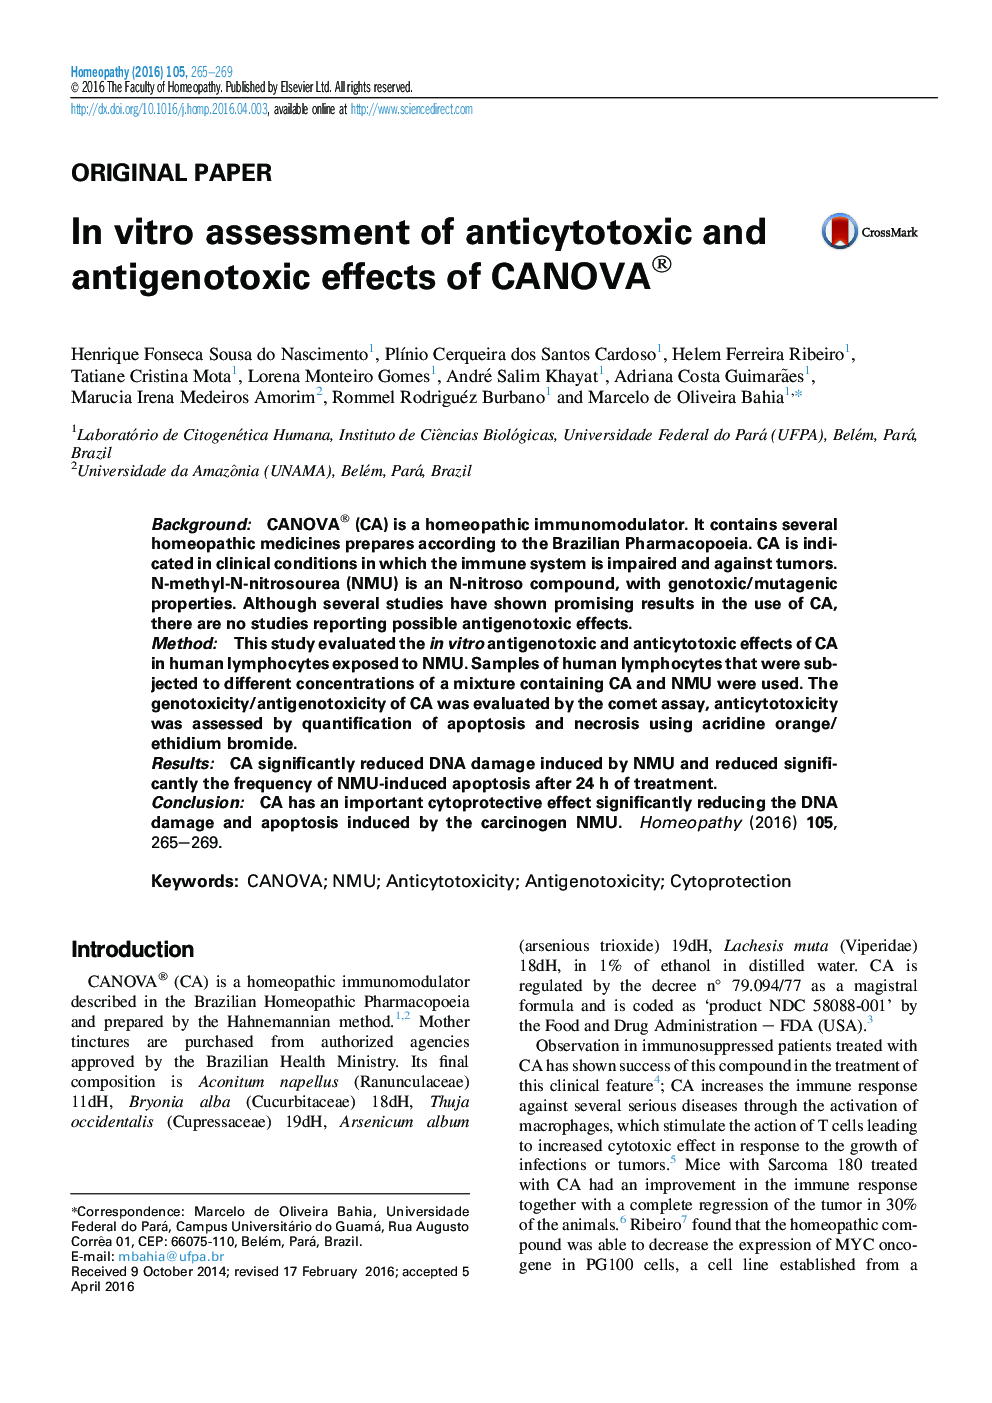 In vitro assessment of anticytotoxic and antigenotoxic effects of CANOVA®